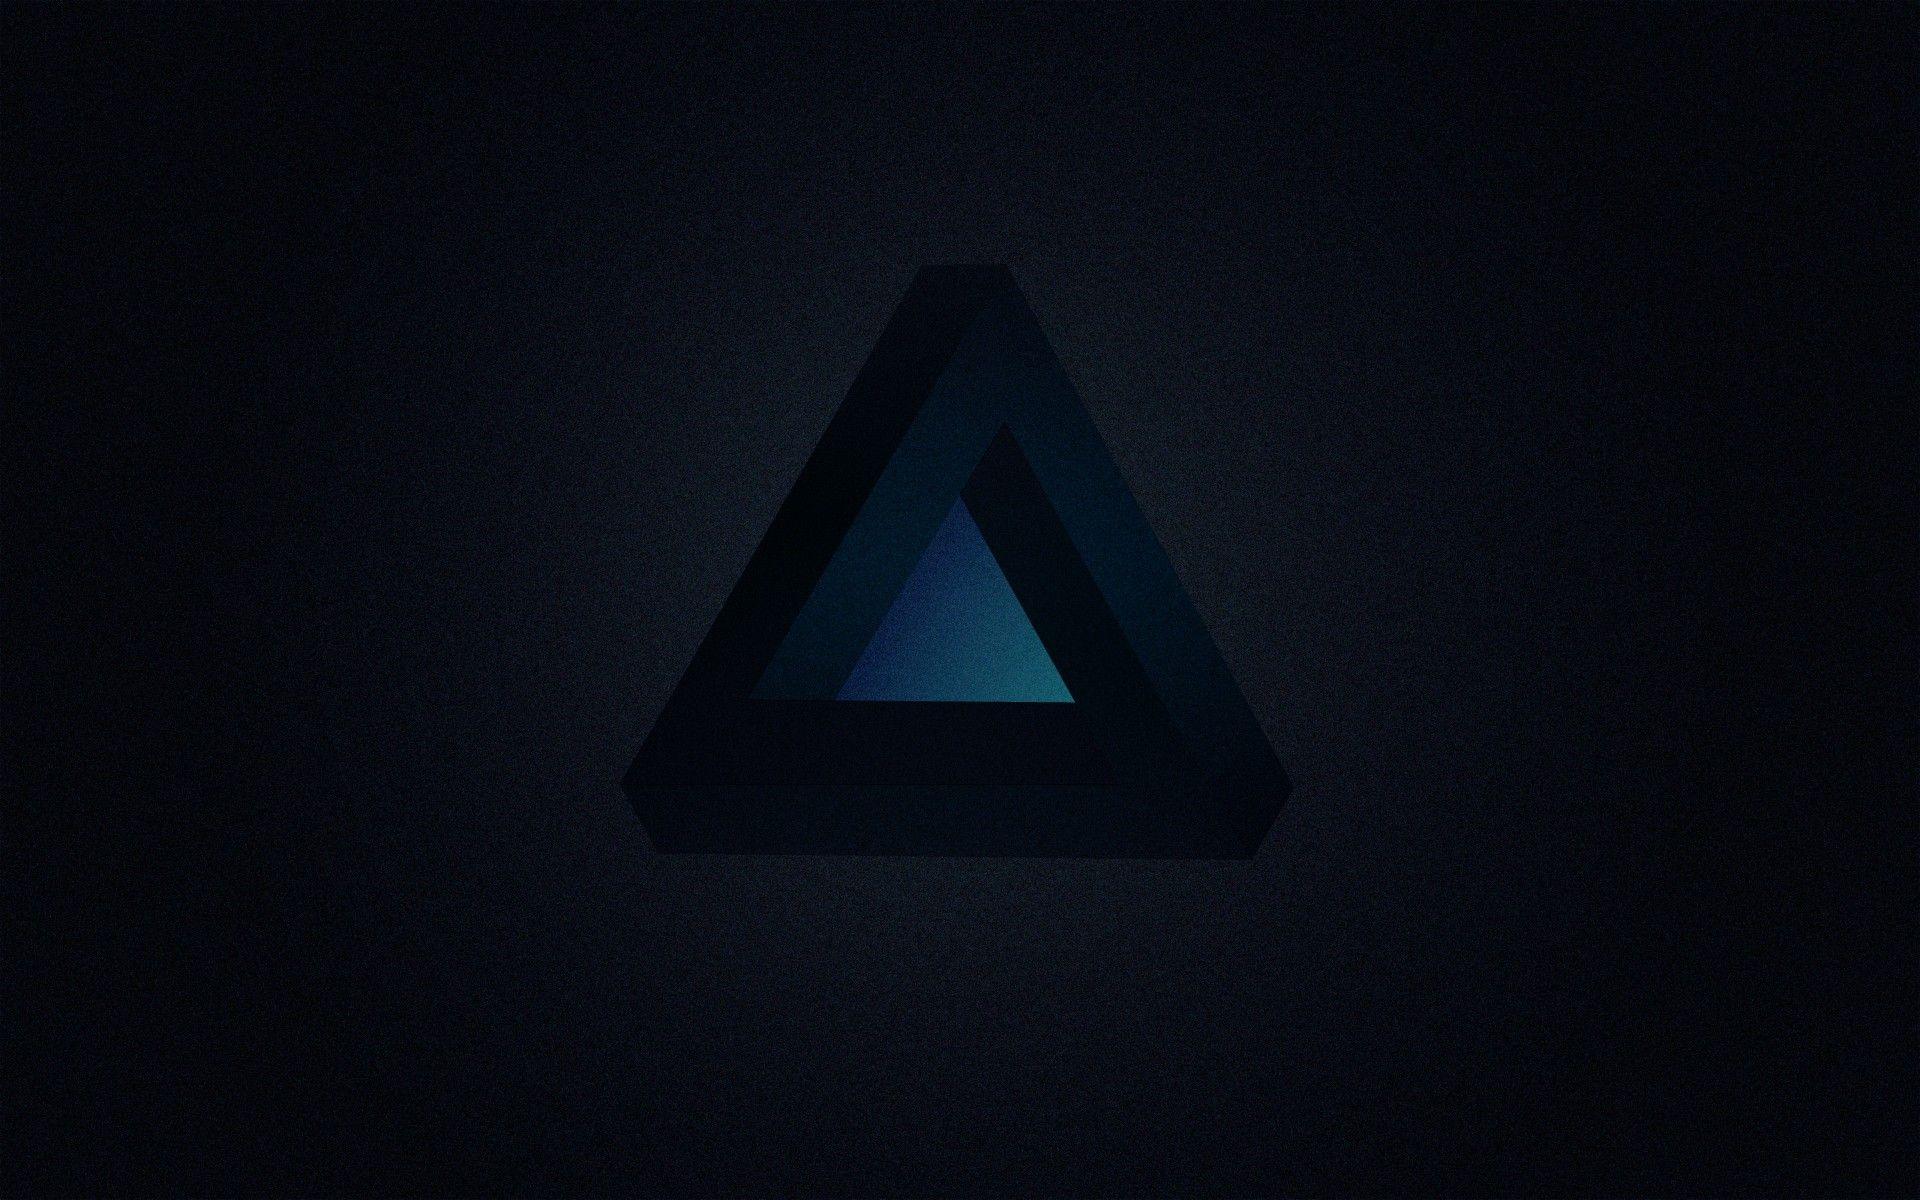 Black and Blue Triangle Logo - Wallpaper : black, digital art, simple background, dark, minimalism ...